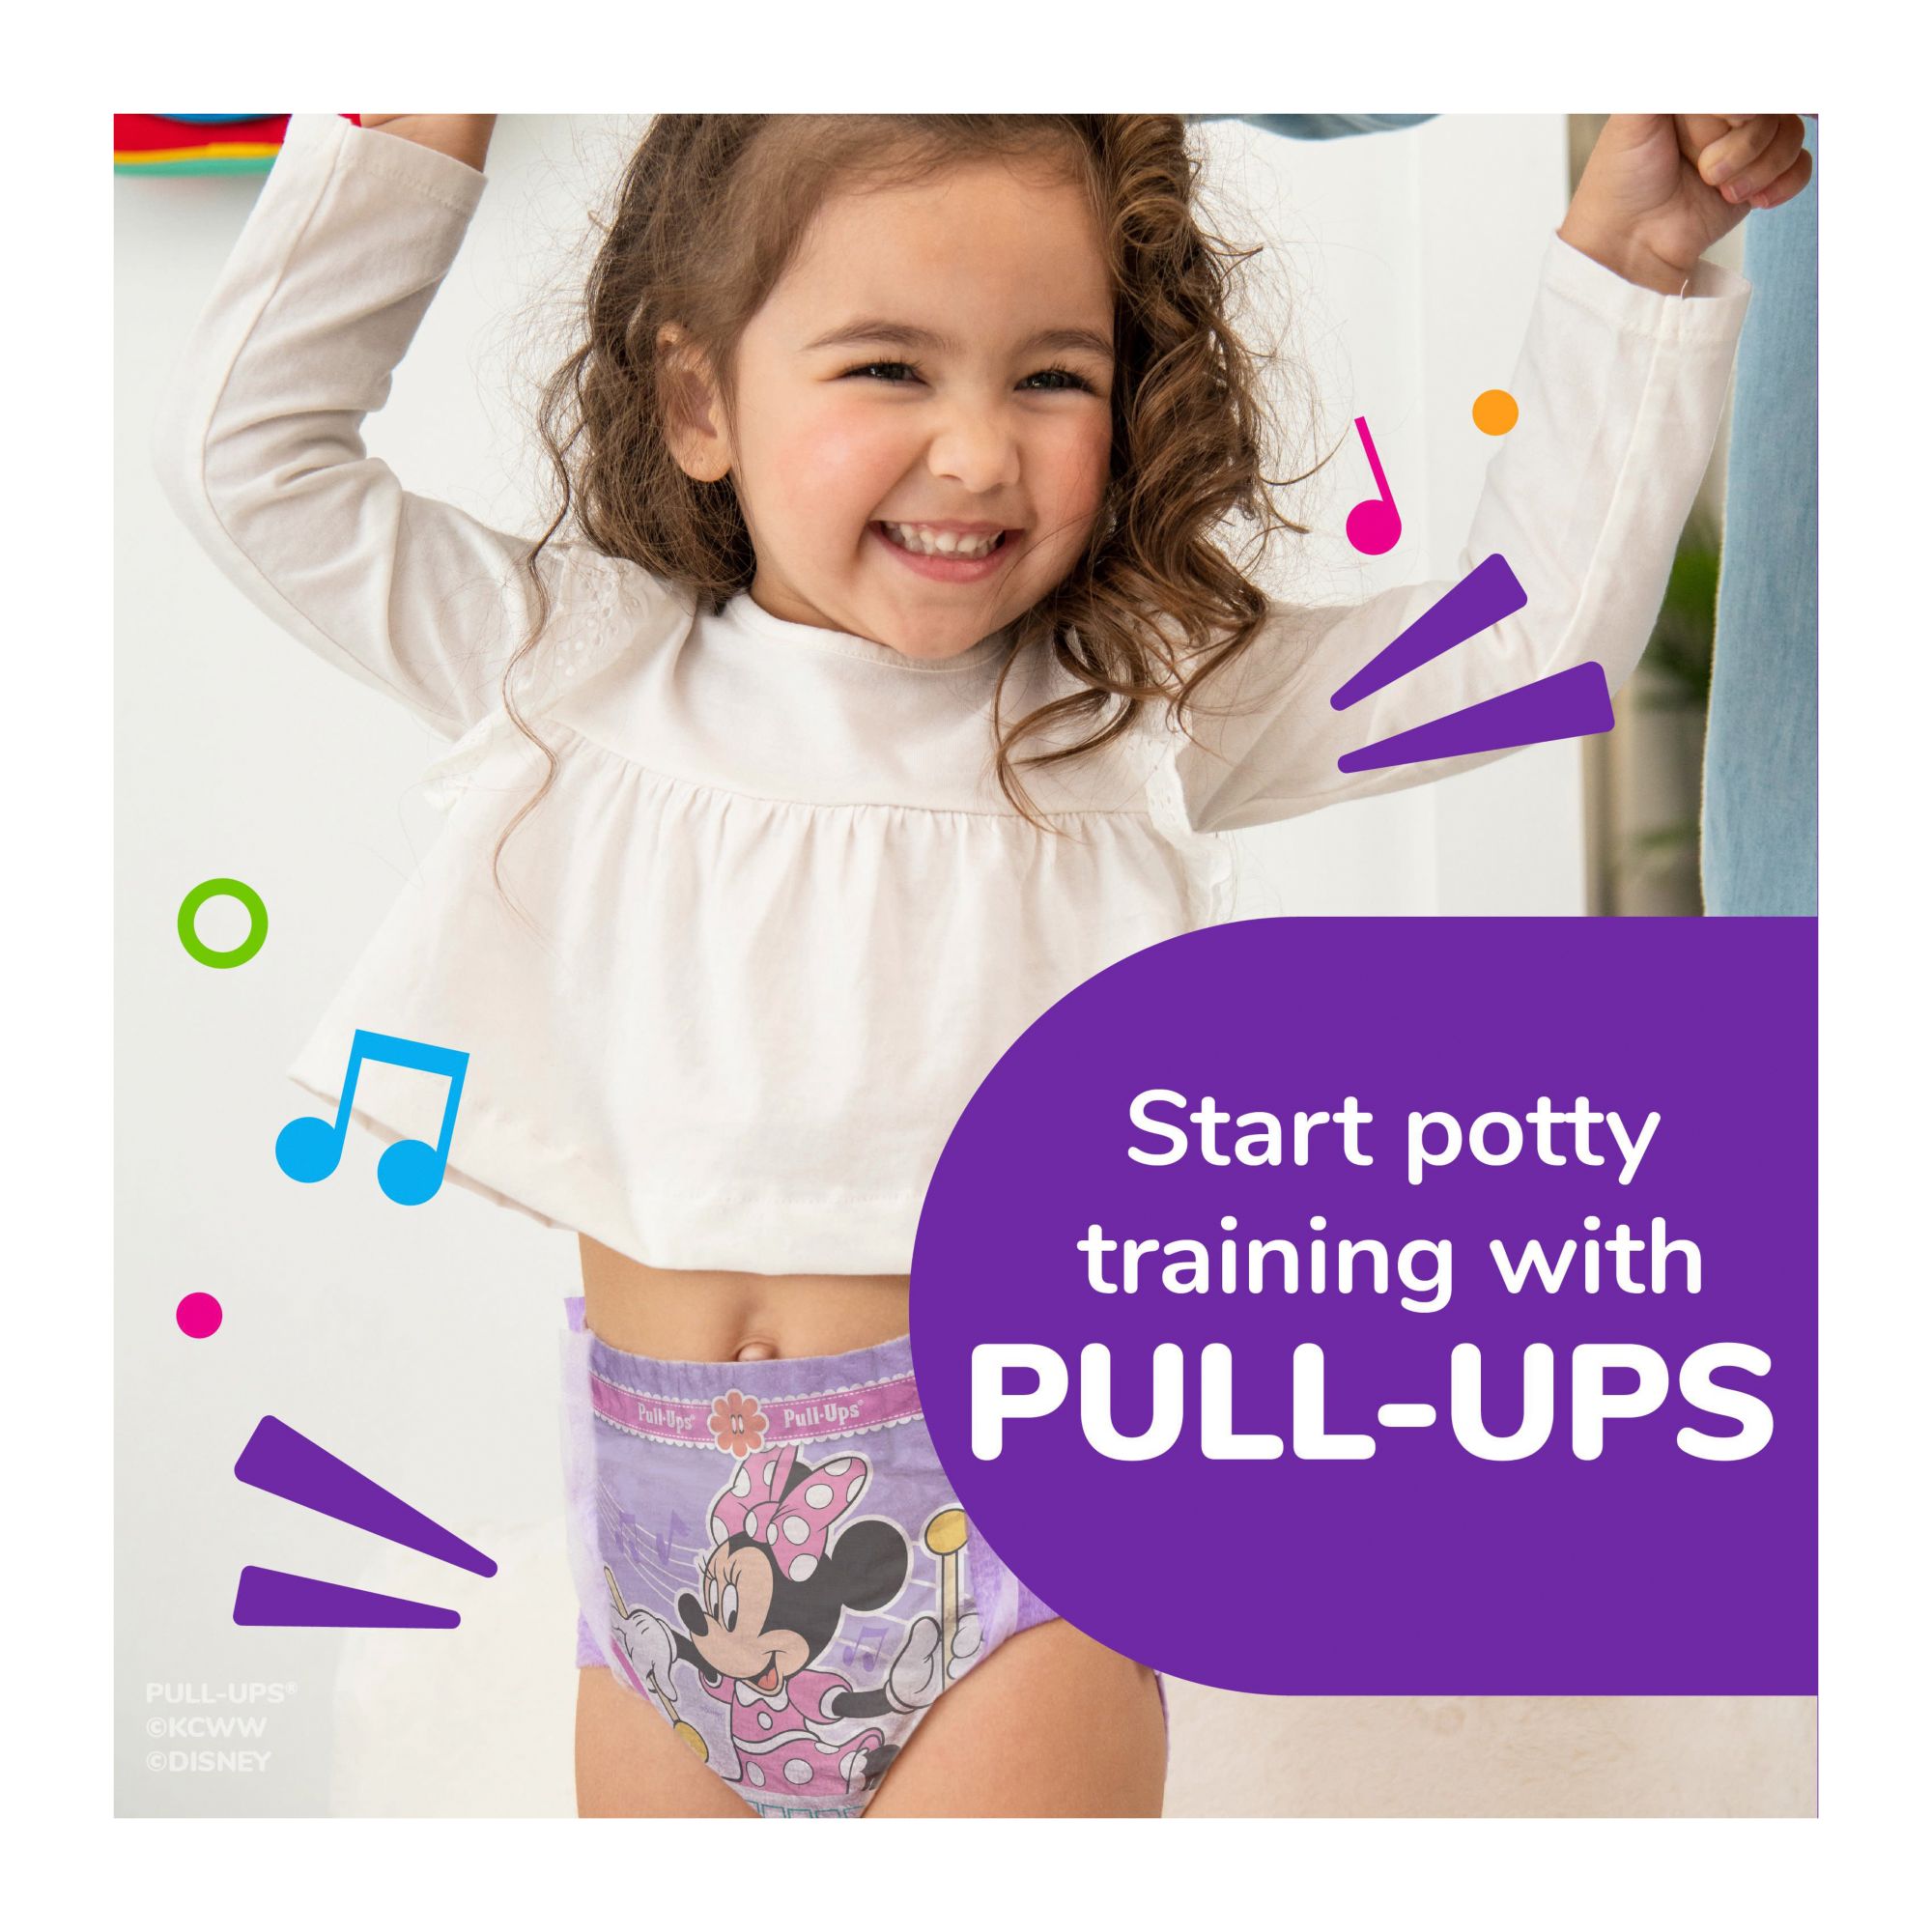 Pull-Ups Girls' Potty Training Pants Size 5, 3T-4T, 84 Ct